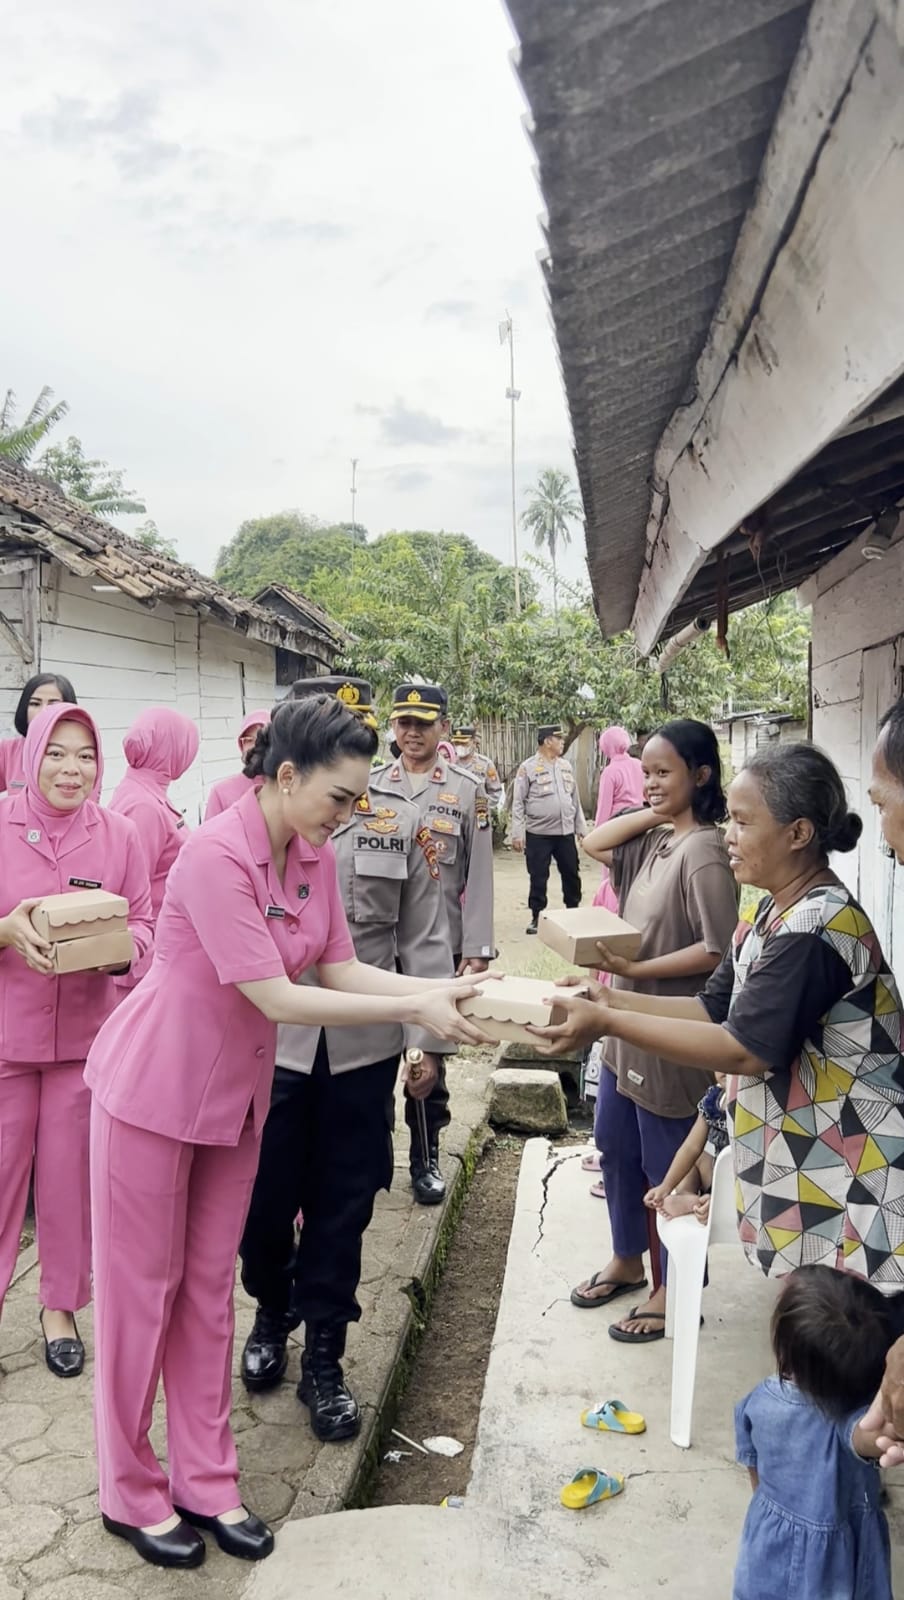 Jajaran Polres Lampung Utara Bersama Bhayangkari Berbagi Berkah Ramadhan